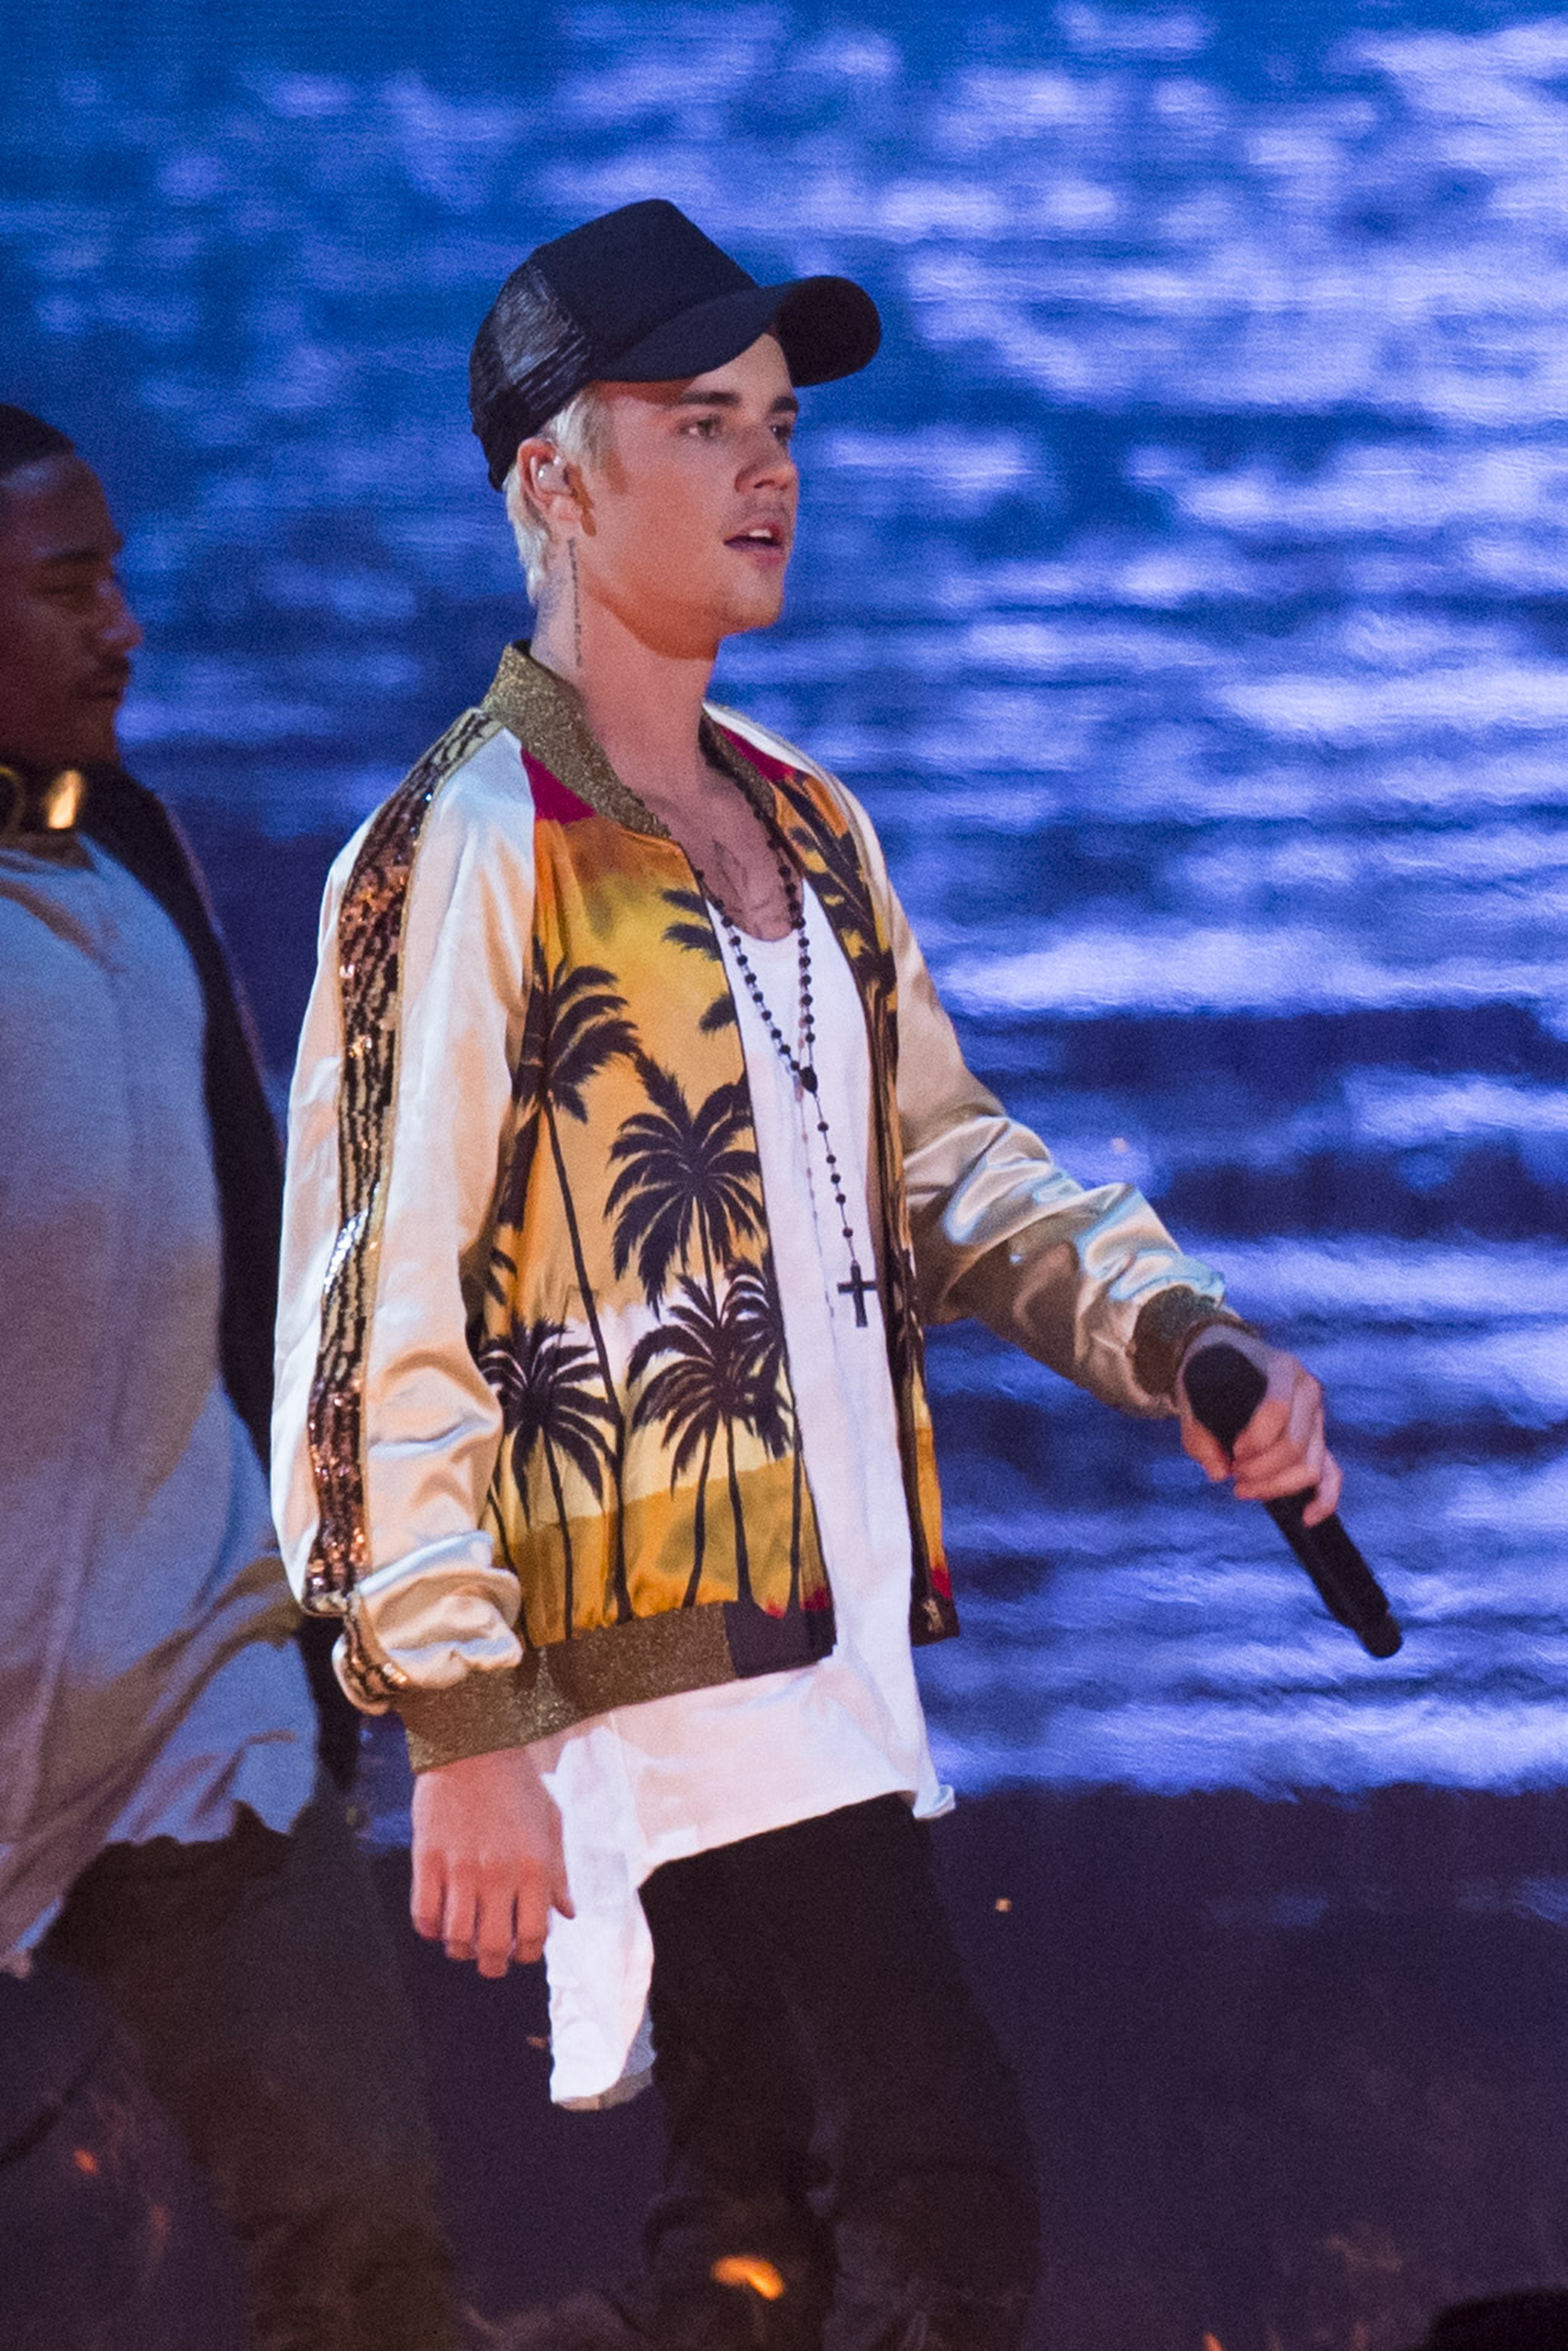 Justin Bieber performing at the BRIT Awards